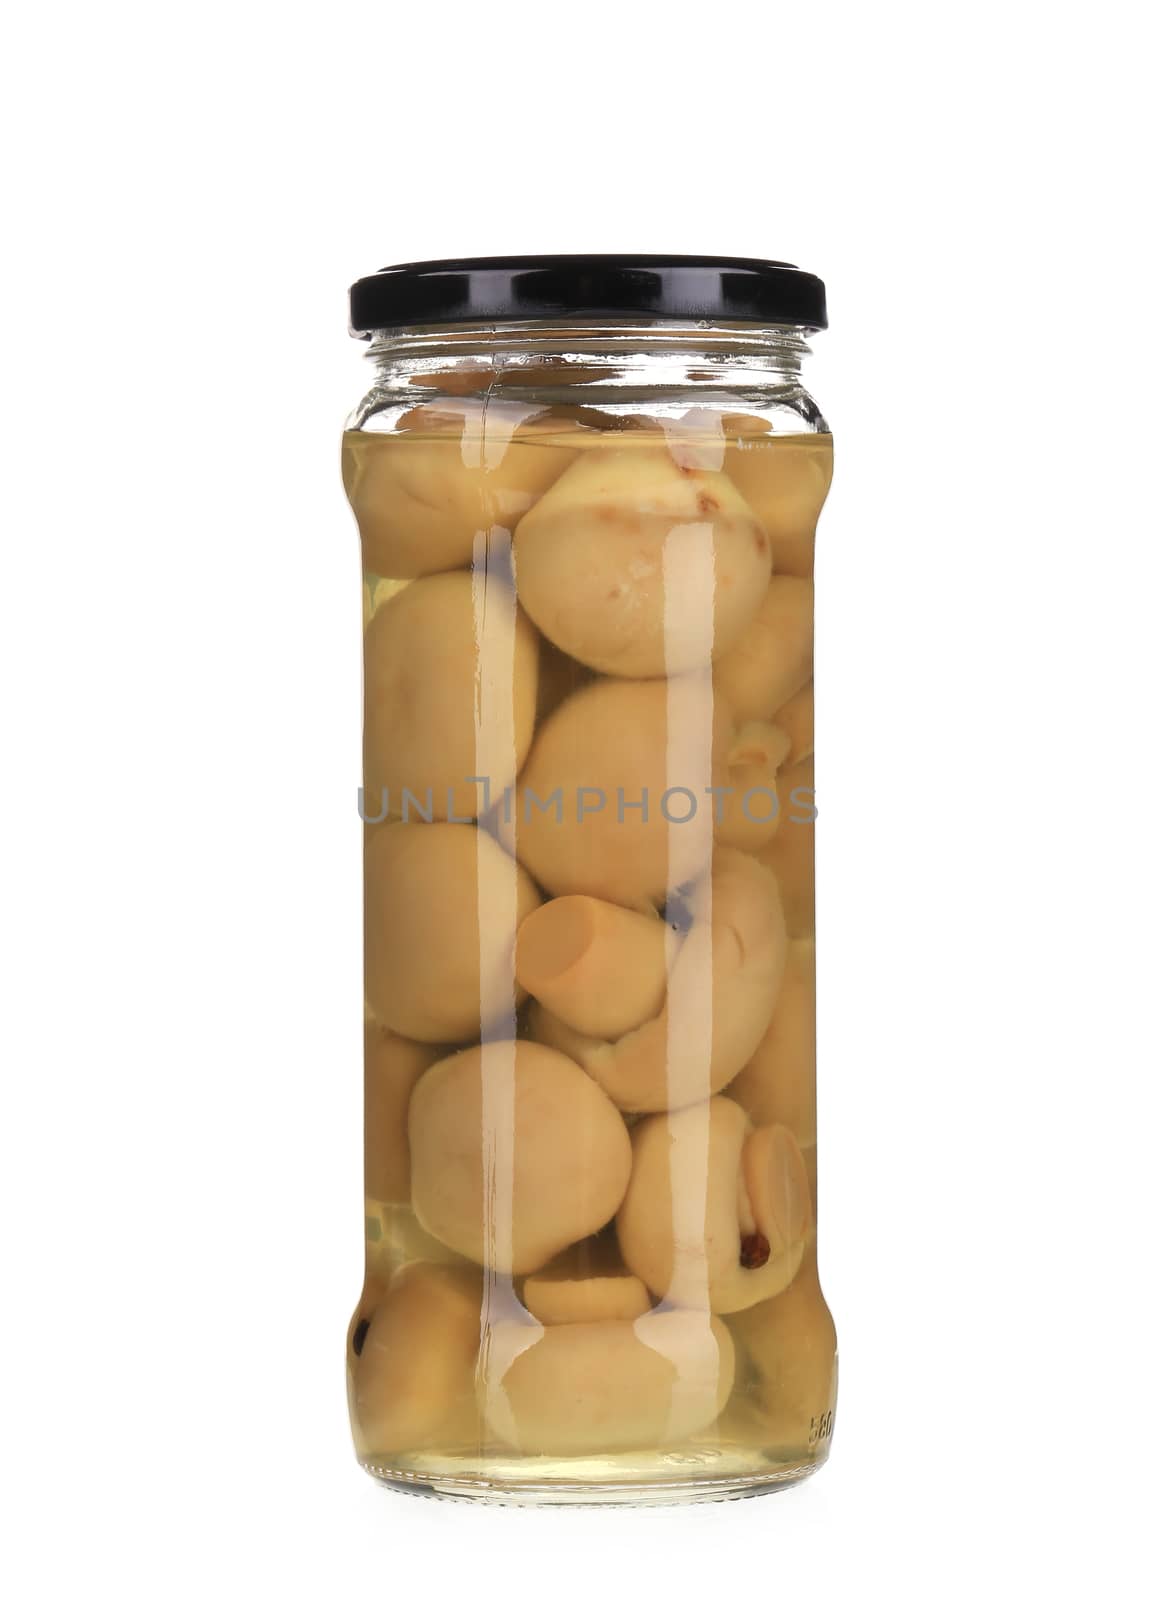 Marinated champignon mushrooms in glass jar. by indigolotos